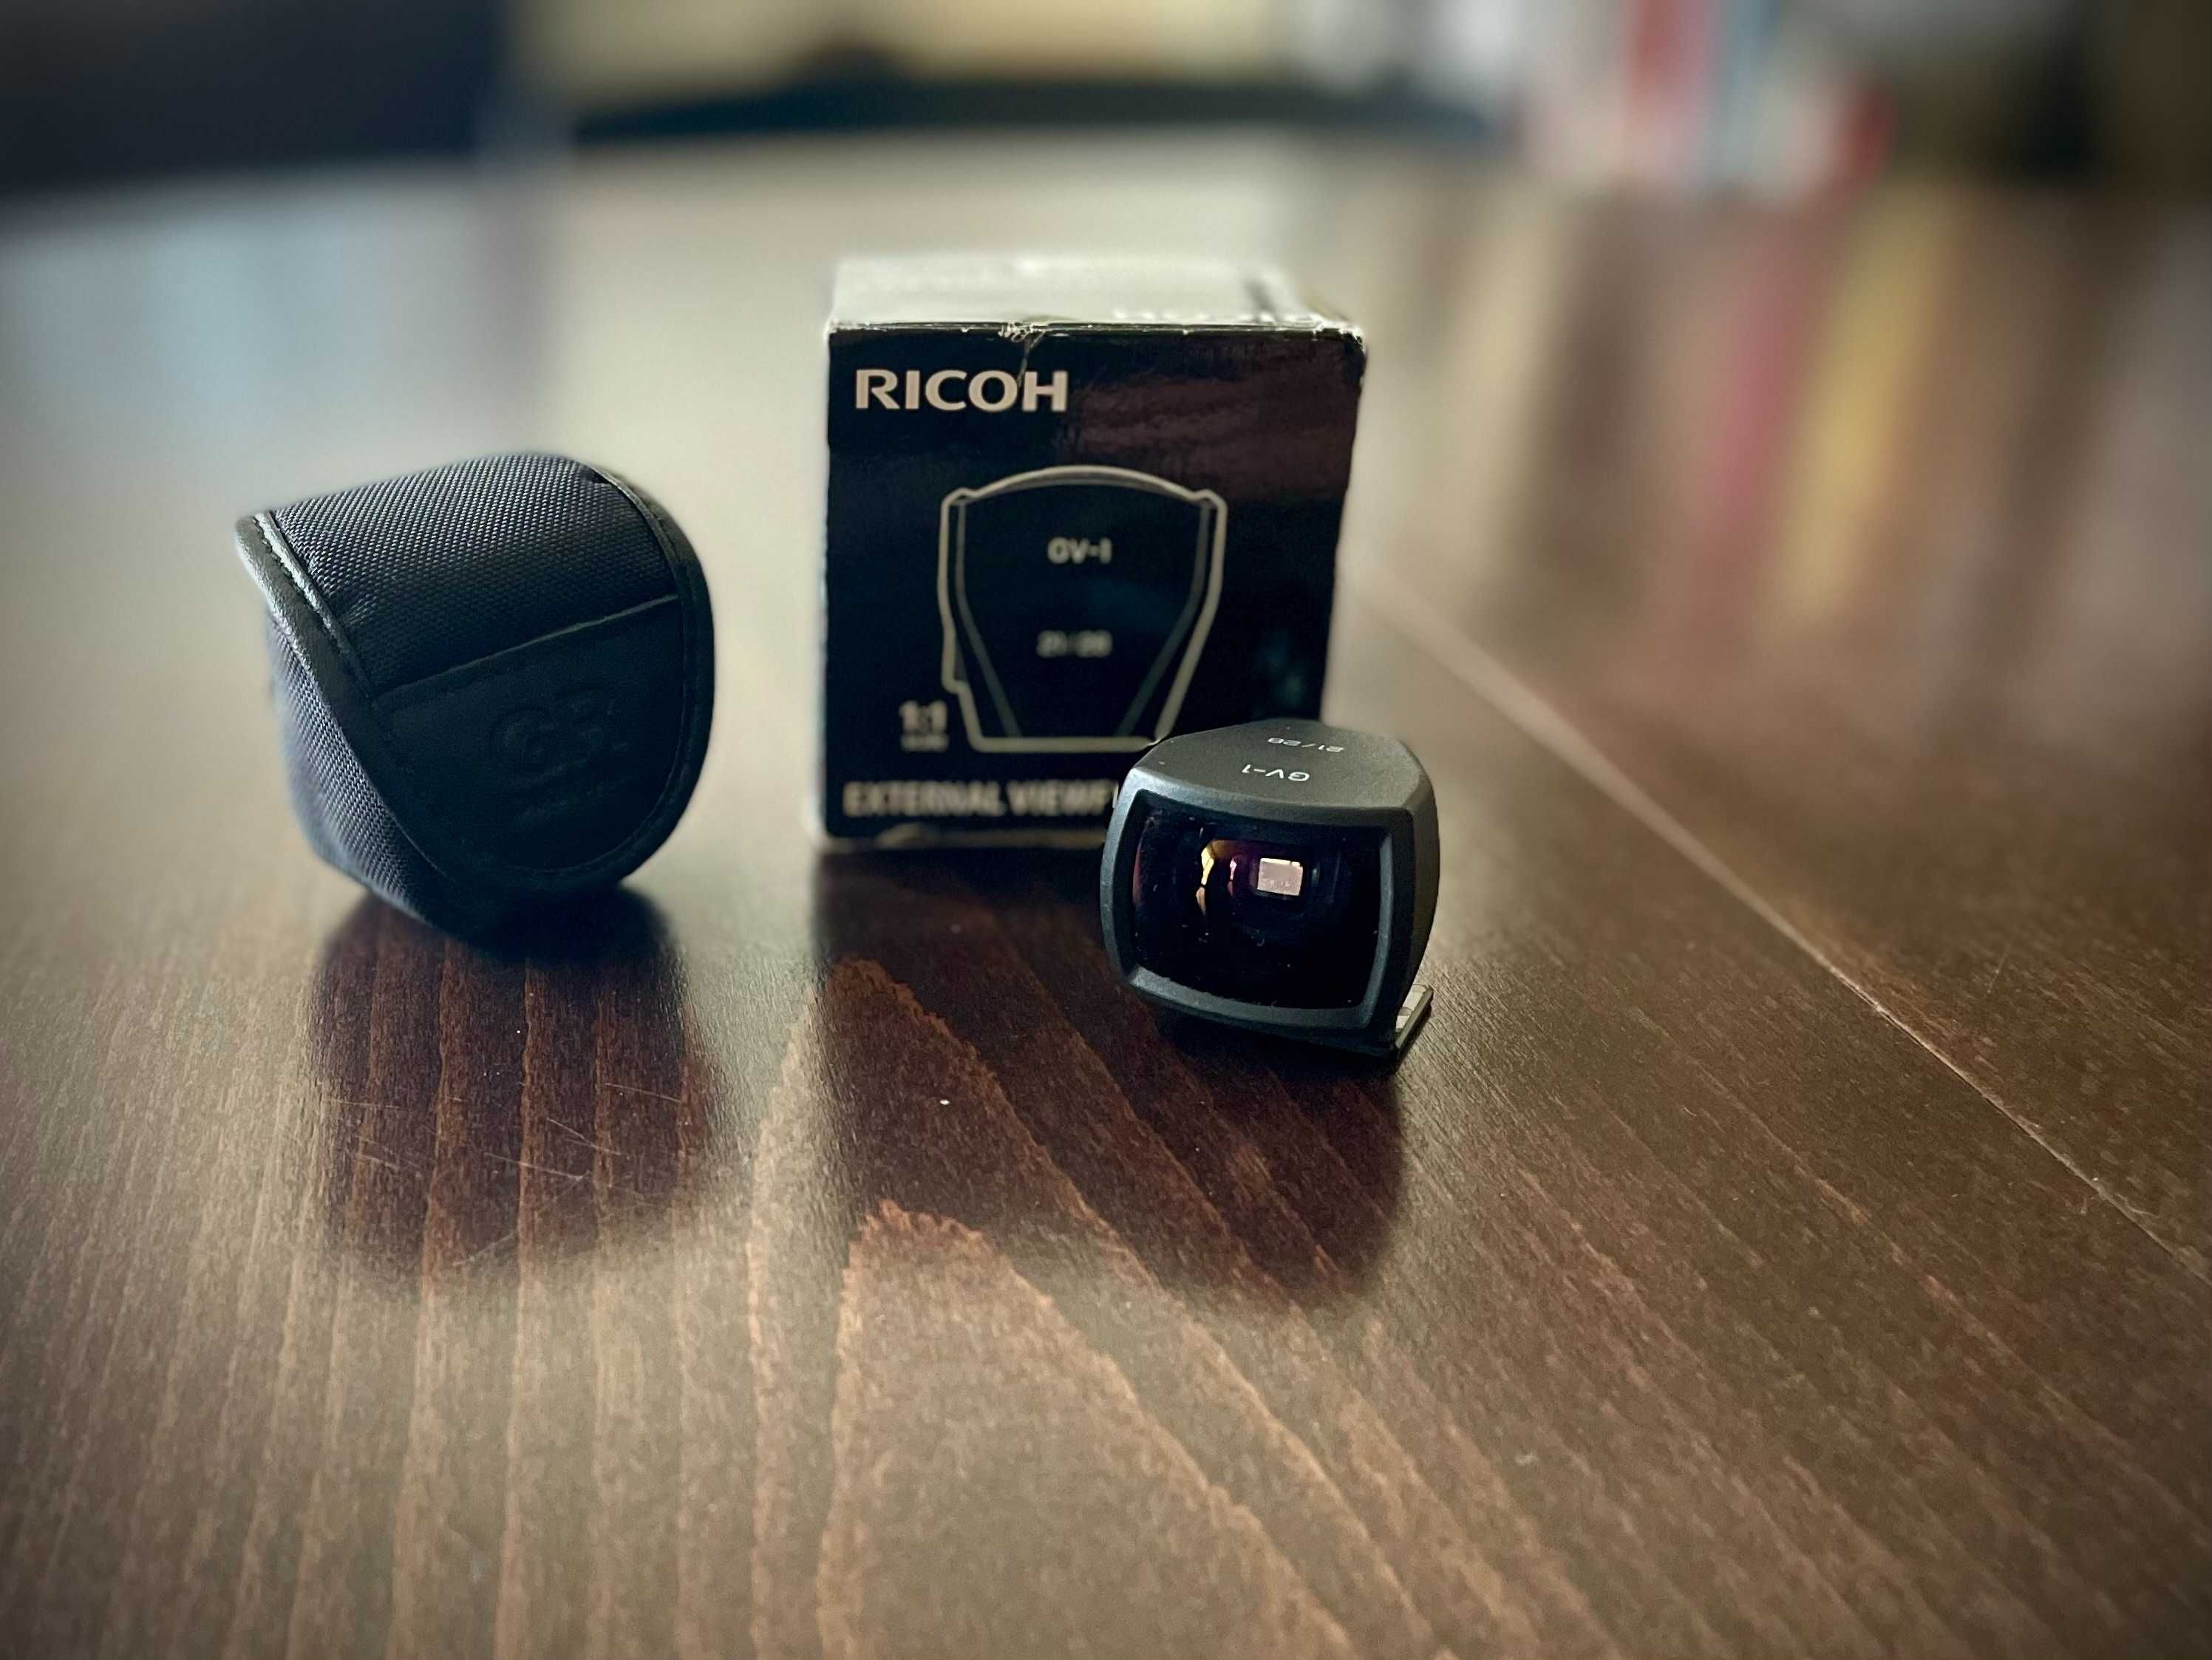 Ricoh GV-1 Optical 21mm 28mm Viewfinder